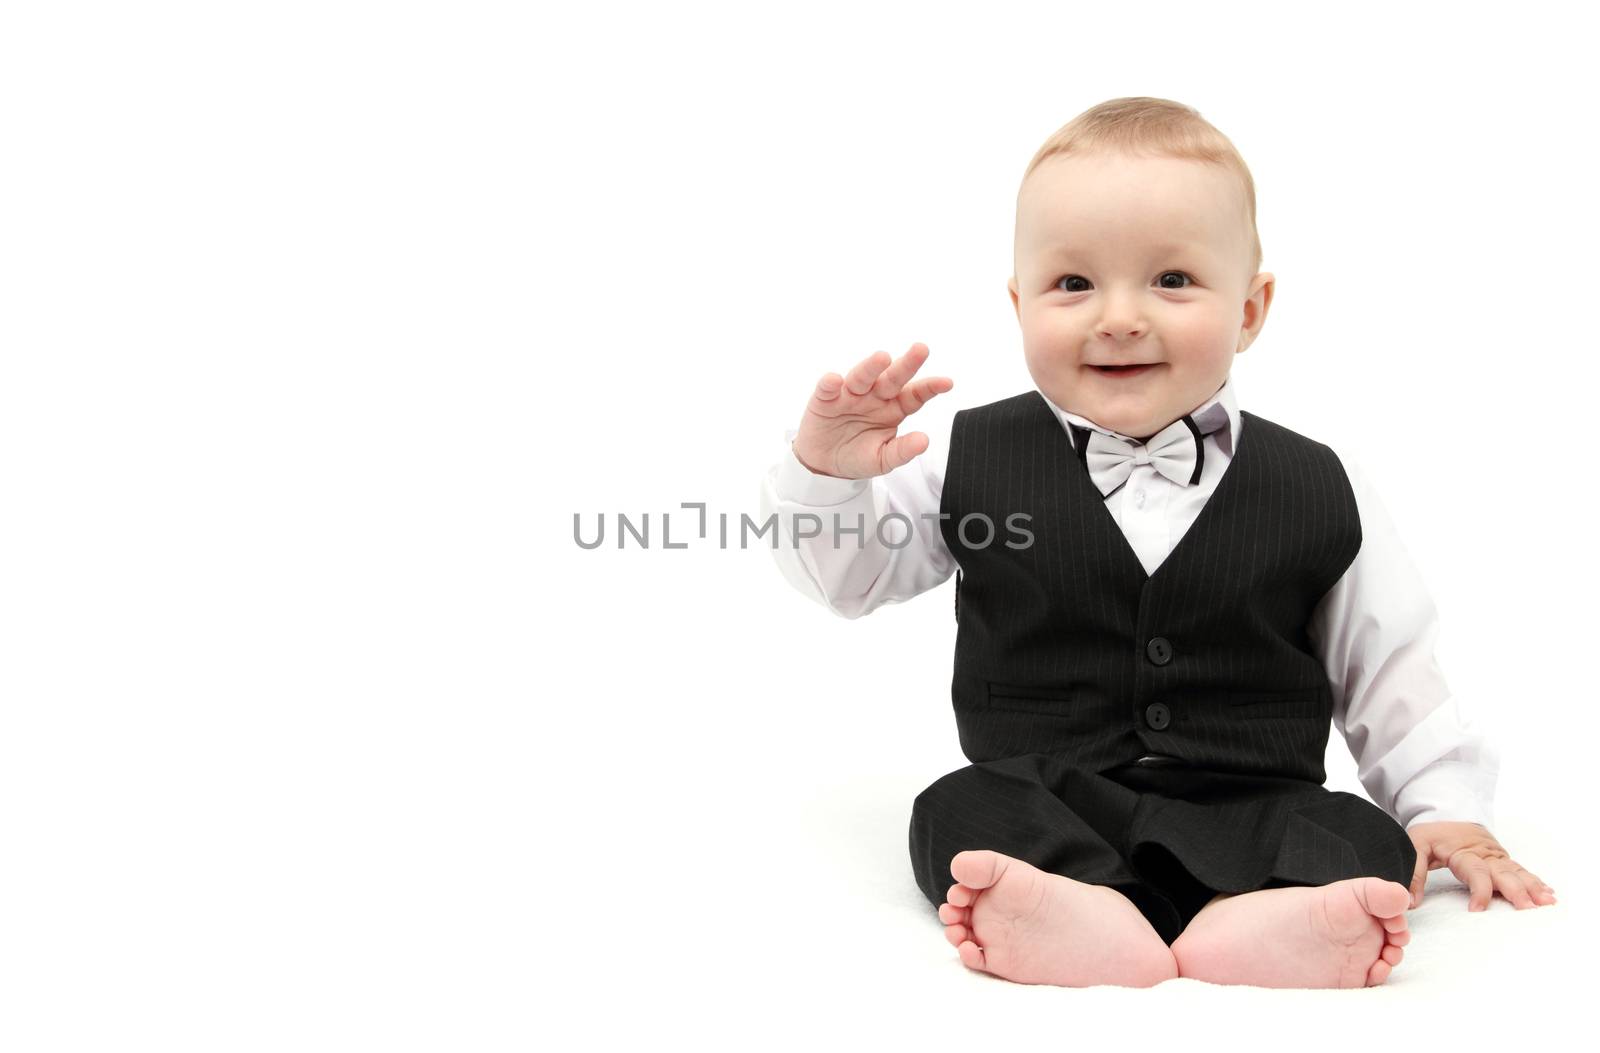 Happy baby boy in suit